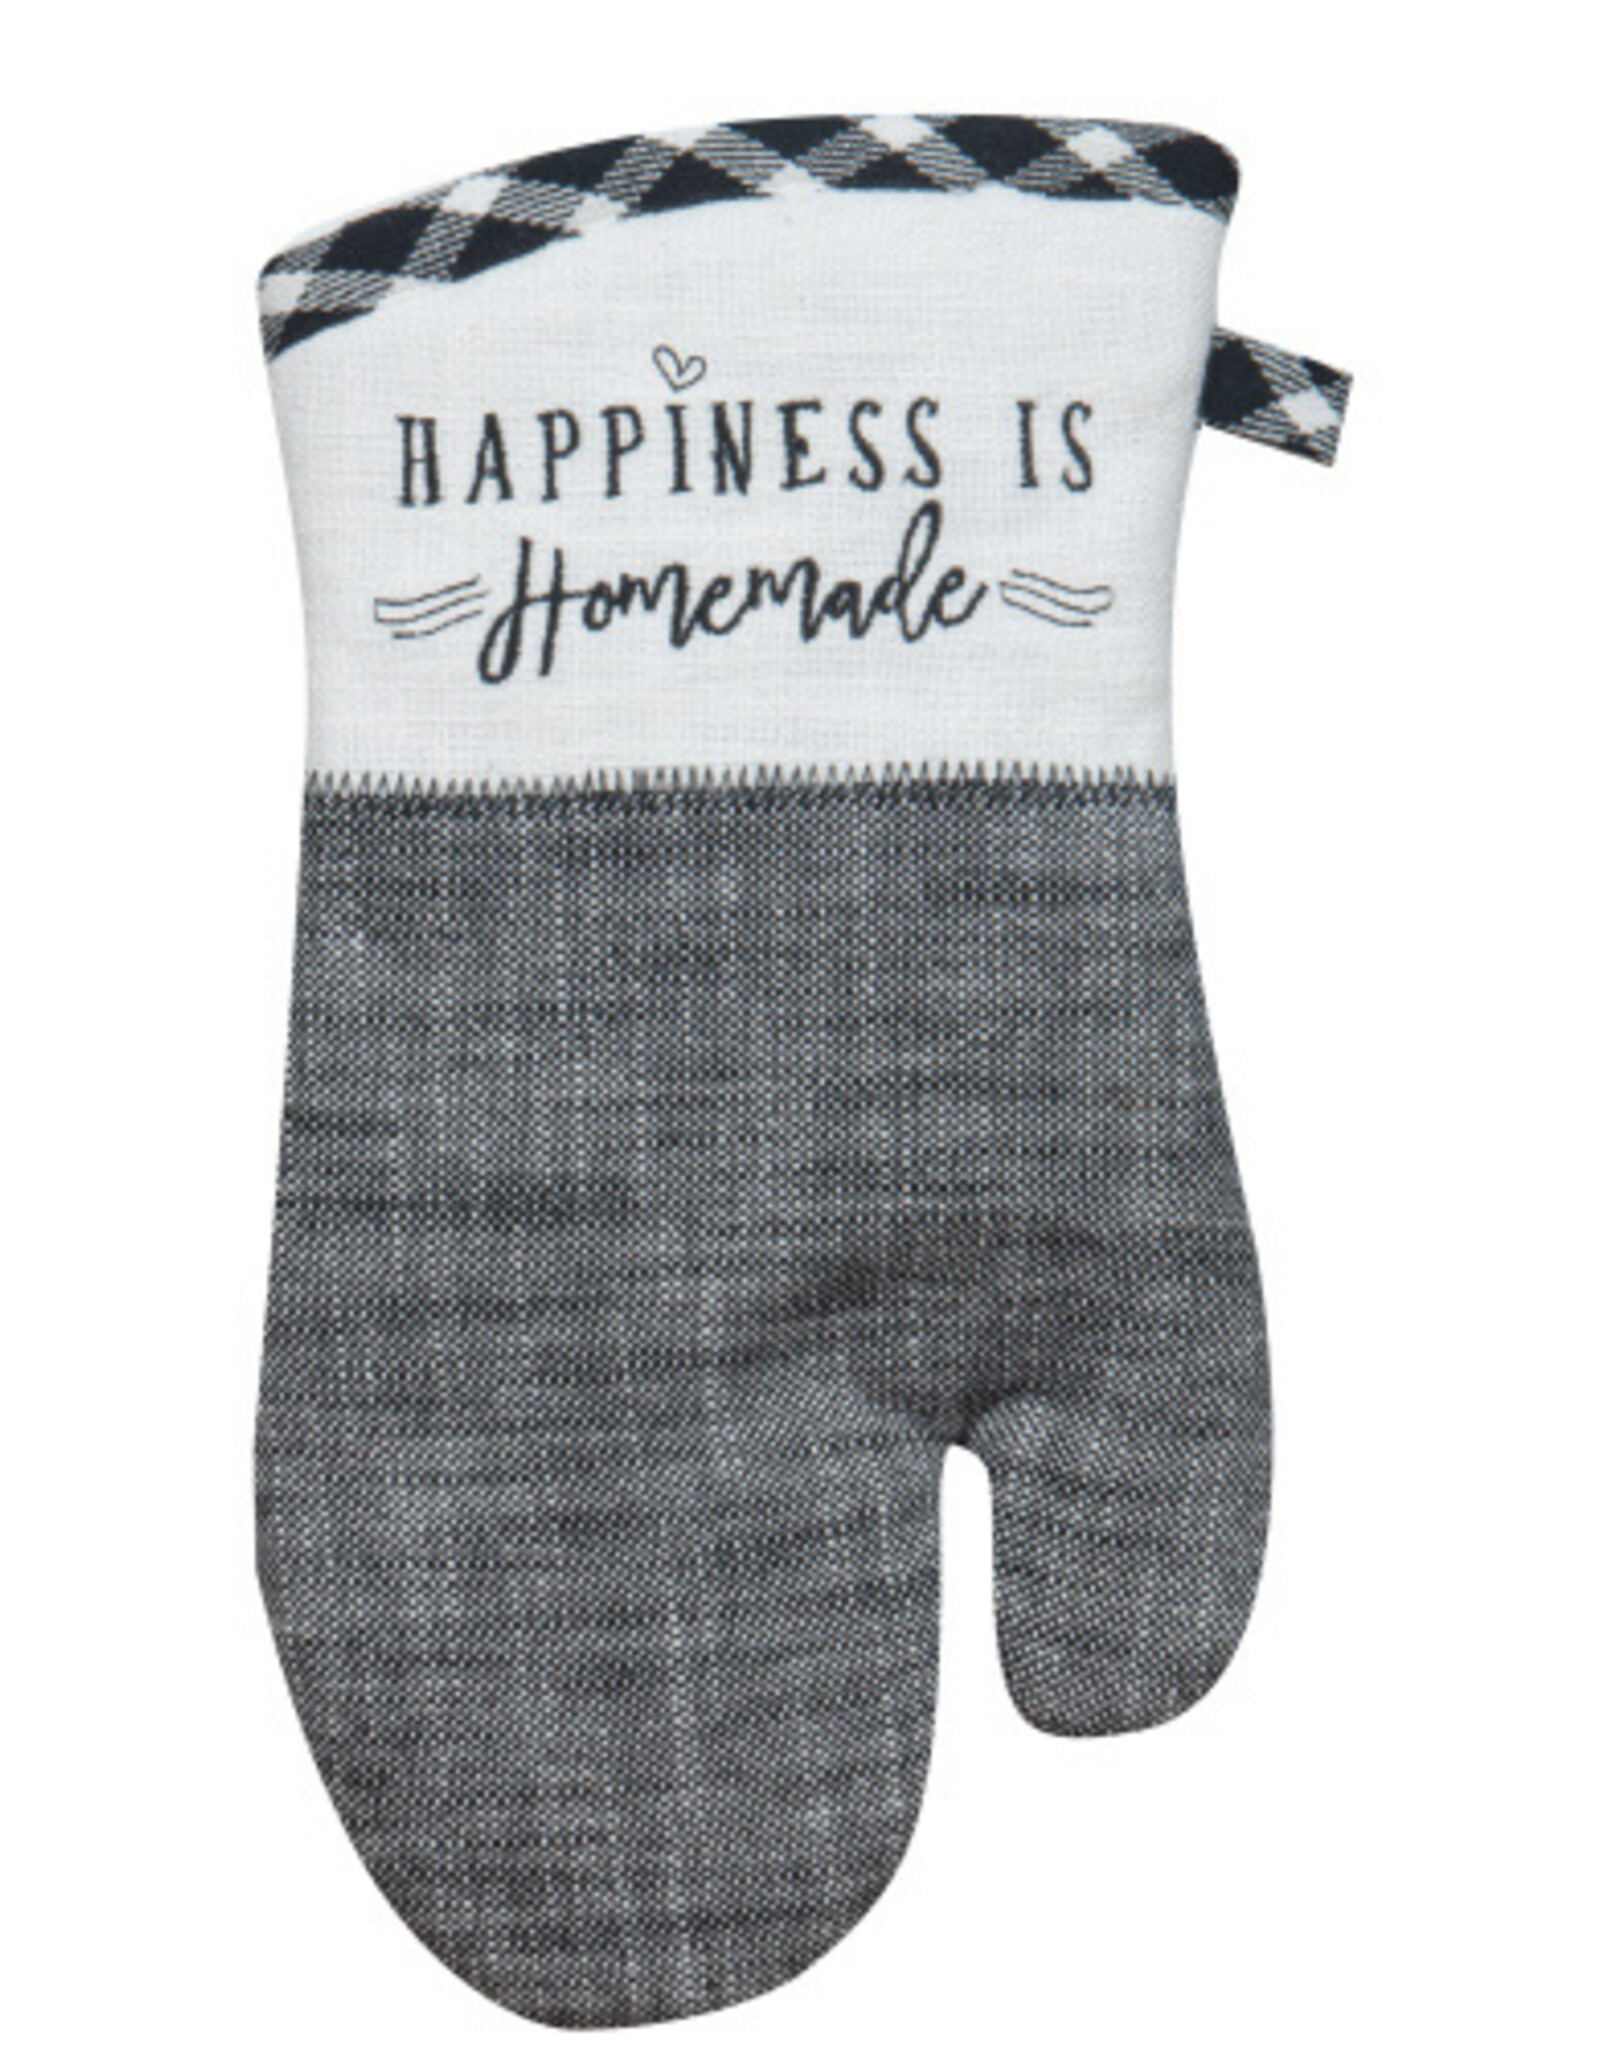 KayDee Oven Mitt, Farmhouse, Happiness is Homemade